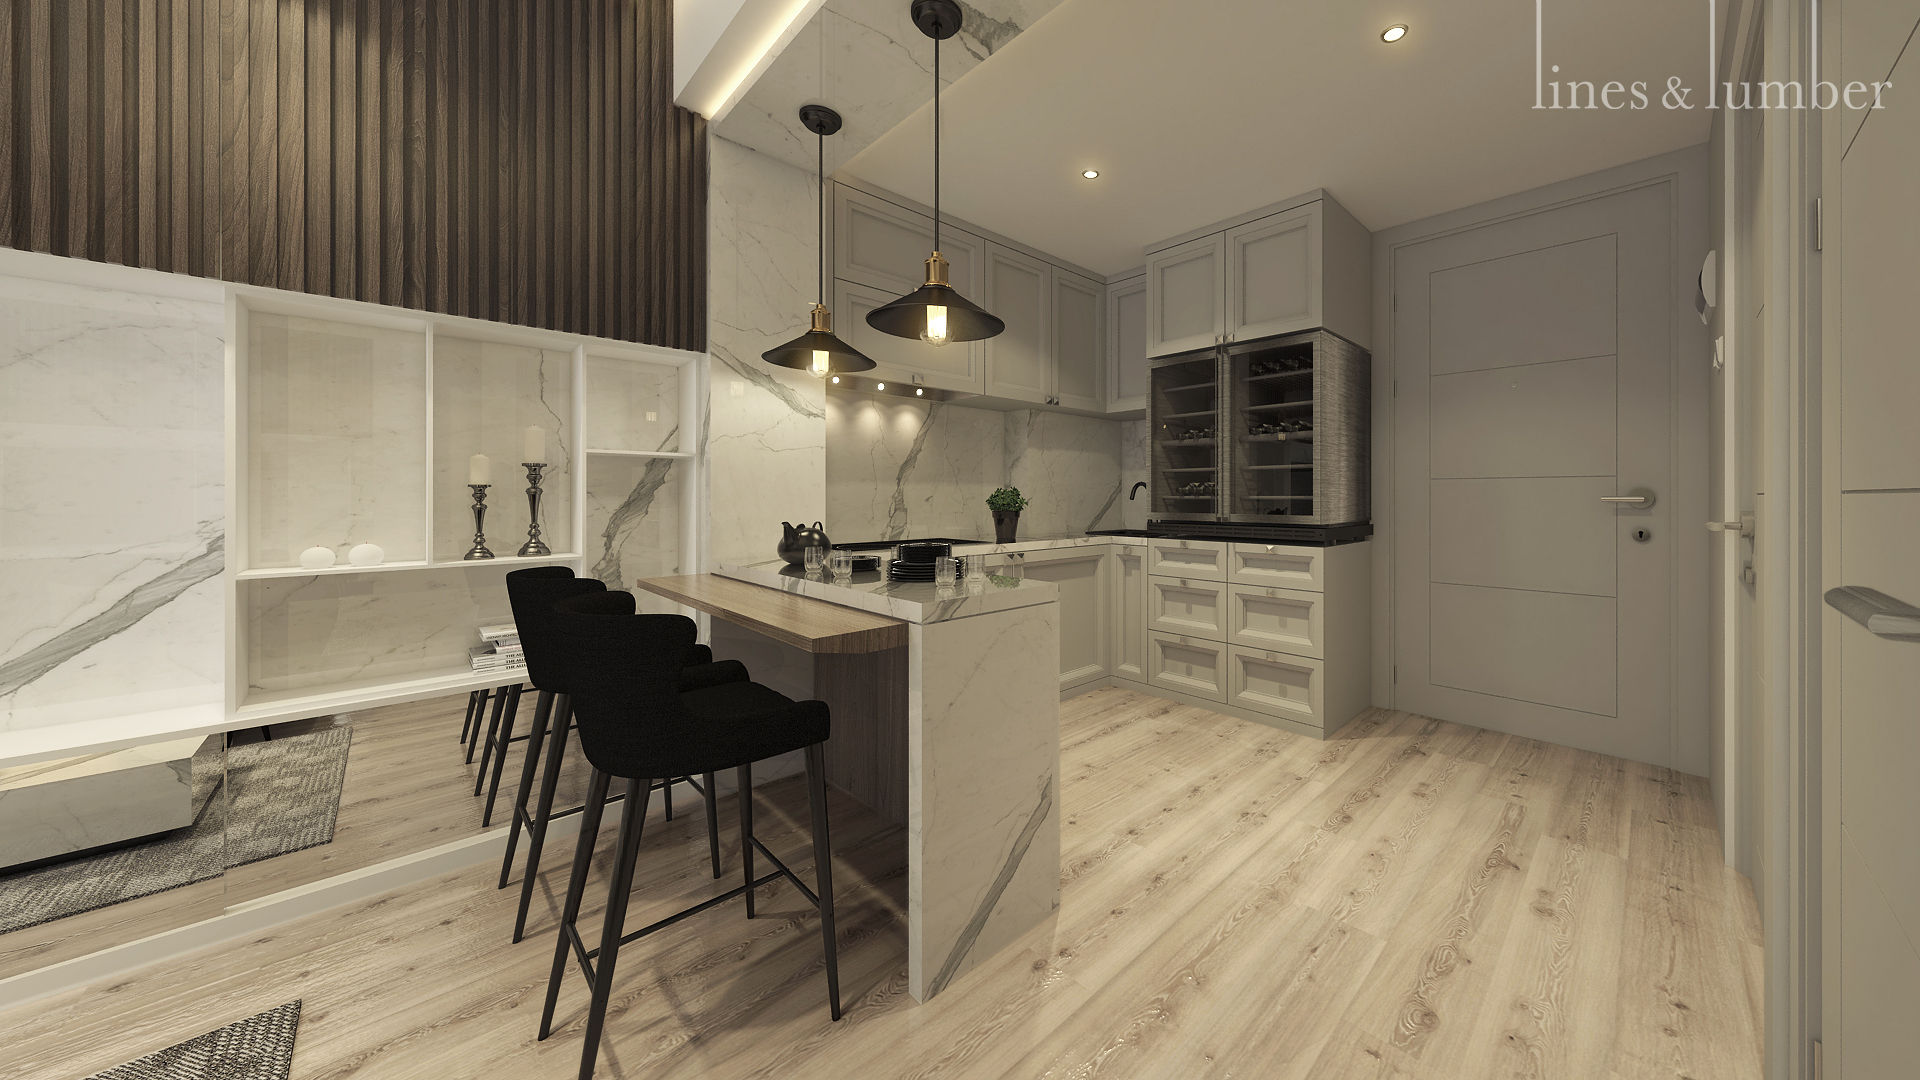 Studio Apartment, Sandalwood Springhill , Lines & Lumber Lines & Lumber Cocinas de estilo rústico